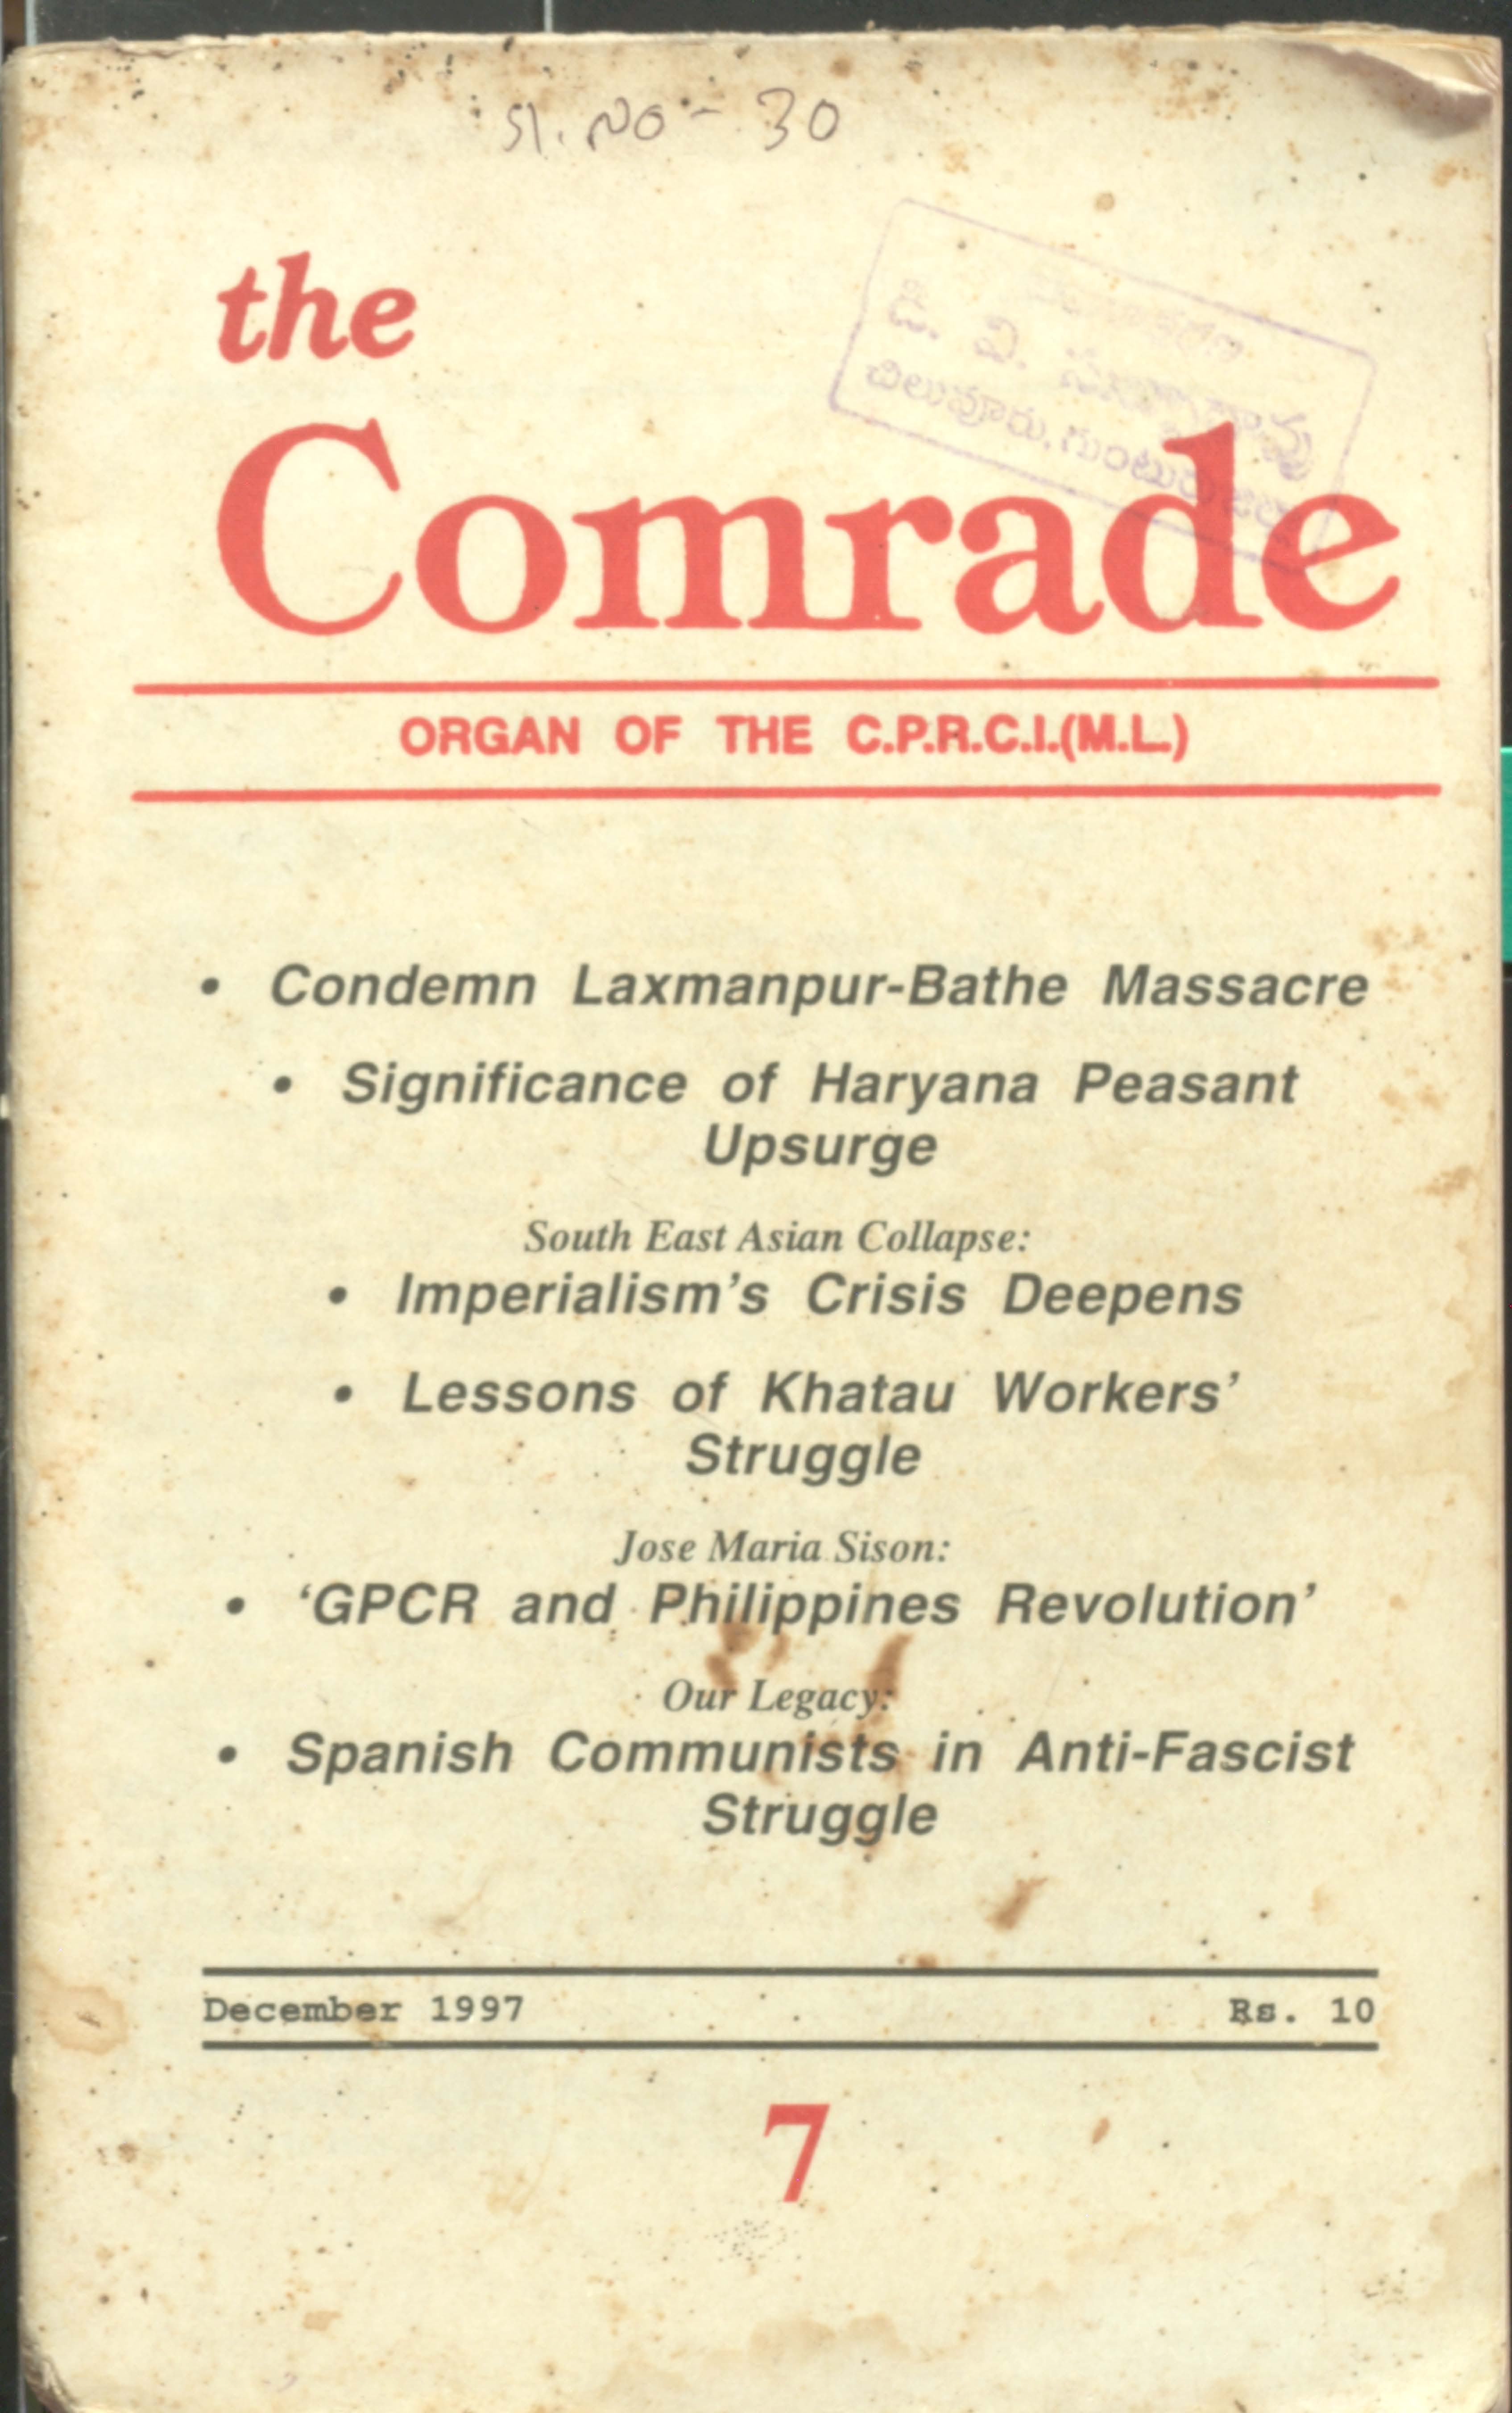 The comrade organ of the C.P.R.C(M.L)